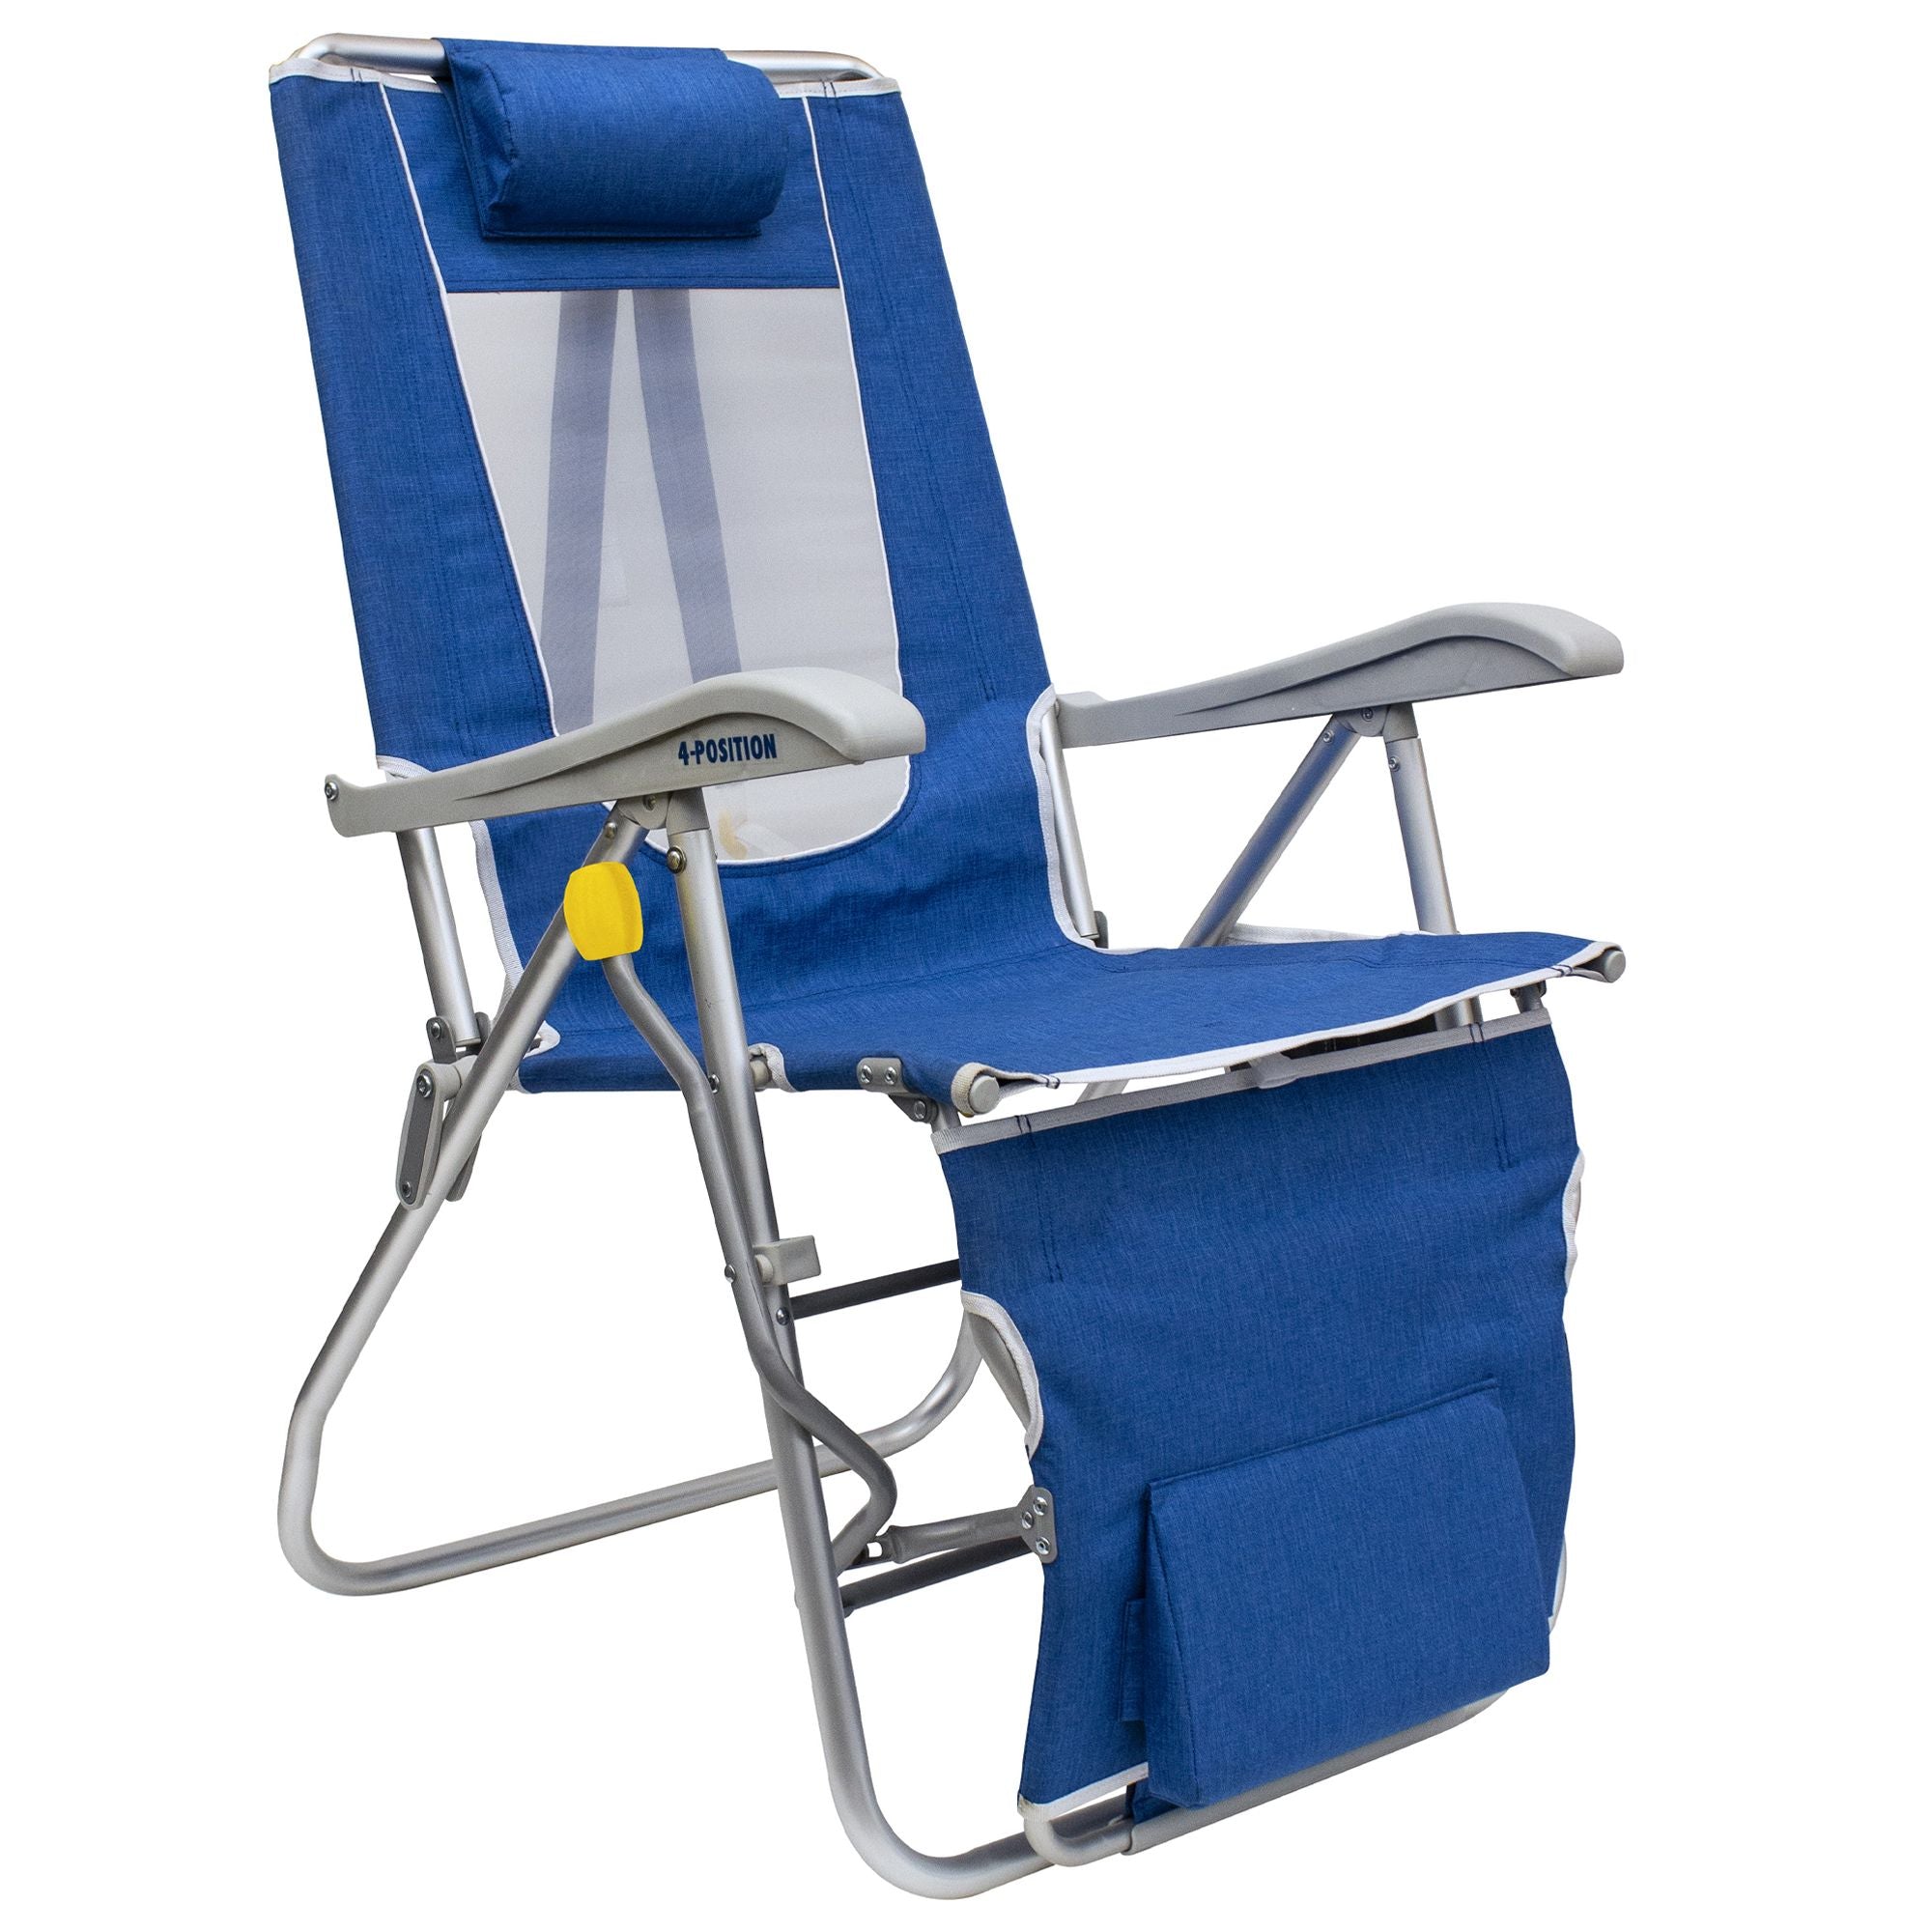 Legz Up Lounger Beach Chair, Heathered Saybrook Blue, Front Legs Down